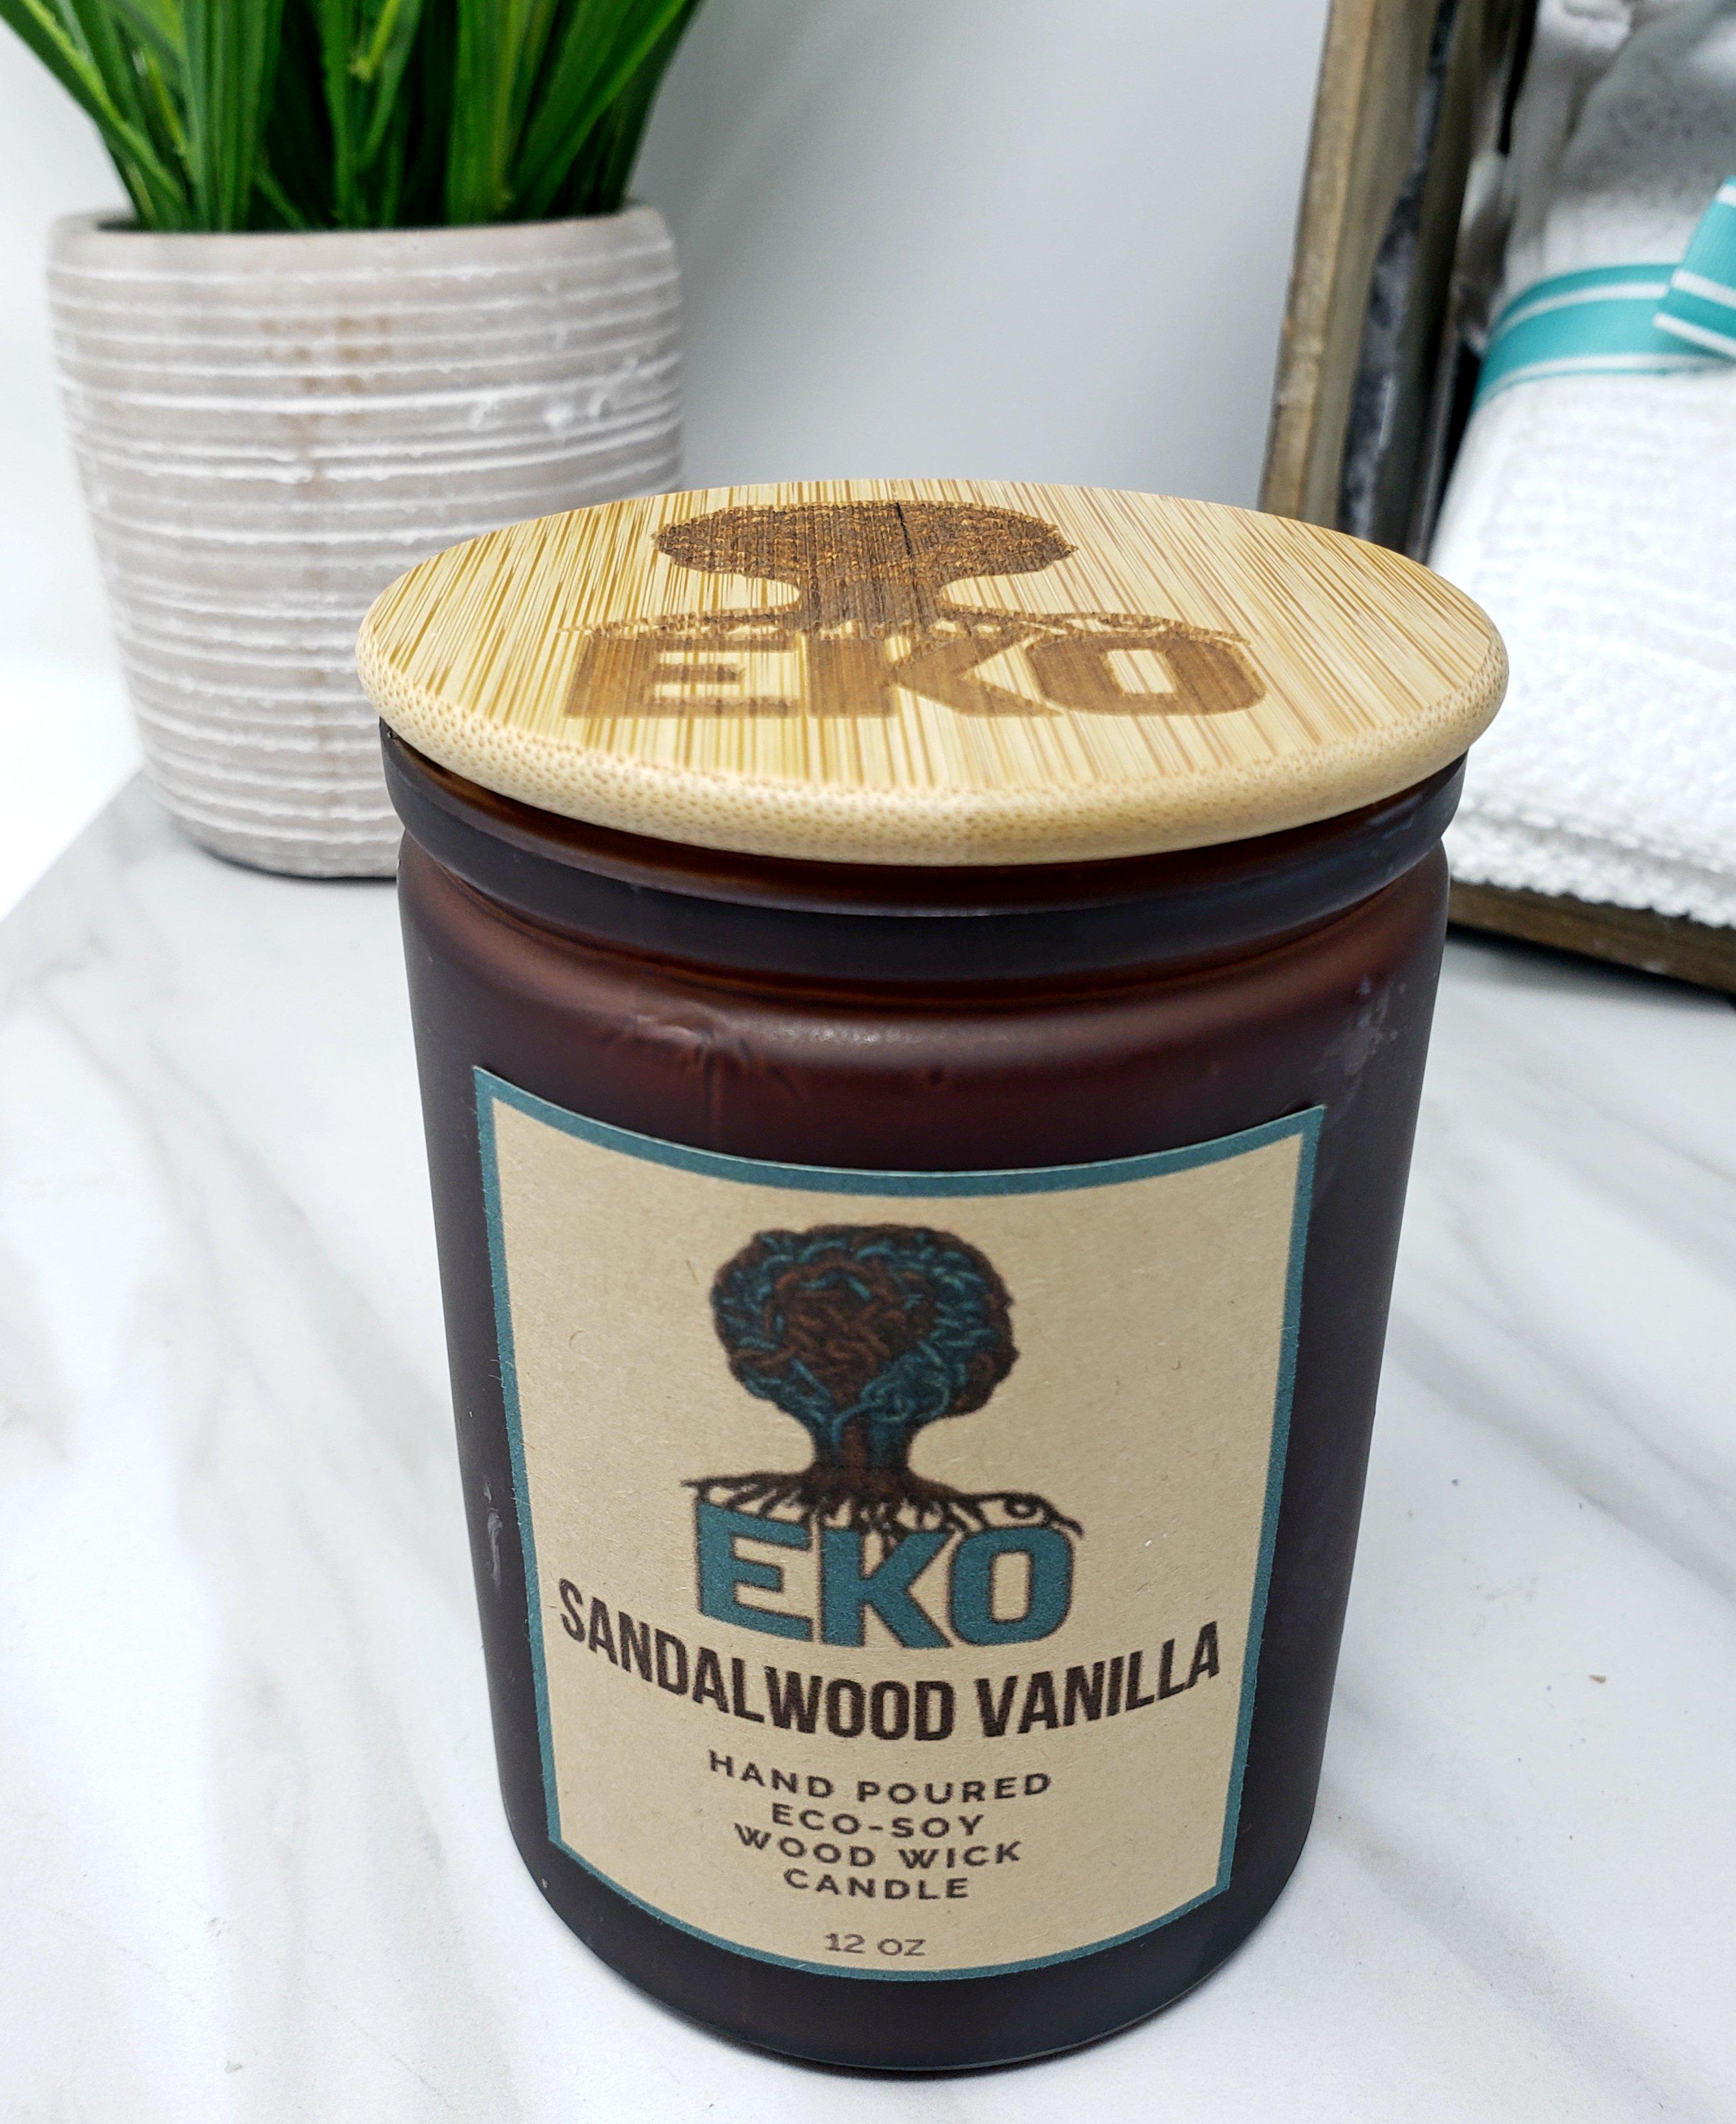 Sandalwood Vanilla Eco-Soy Candle